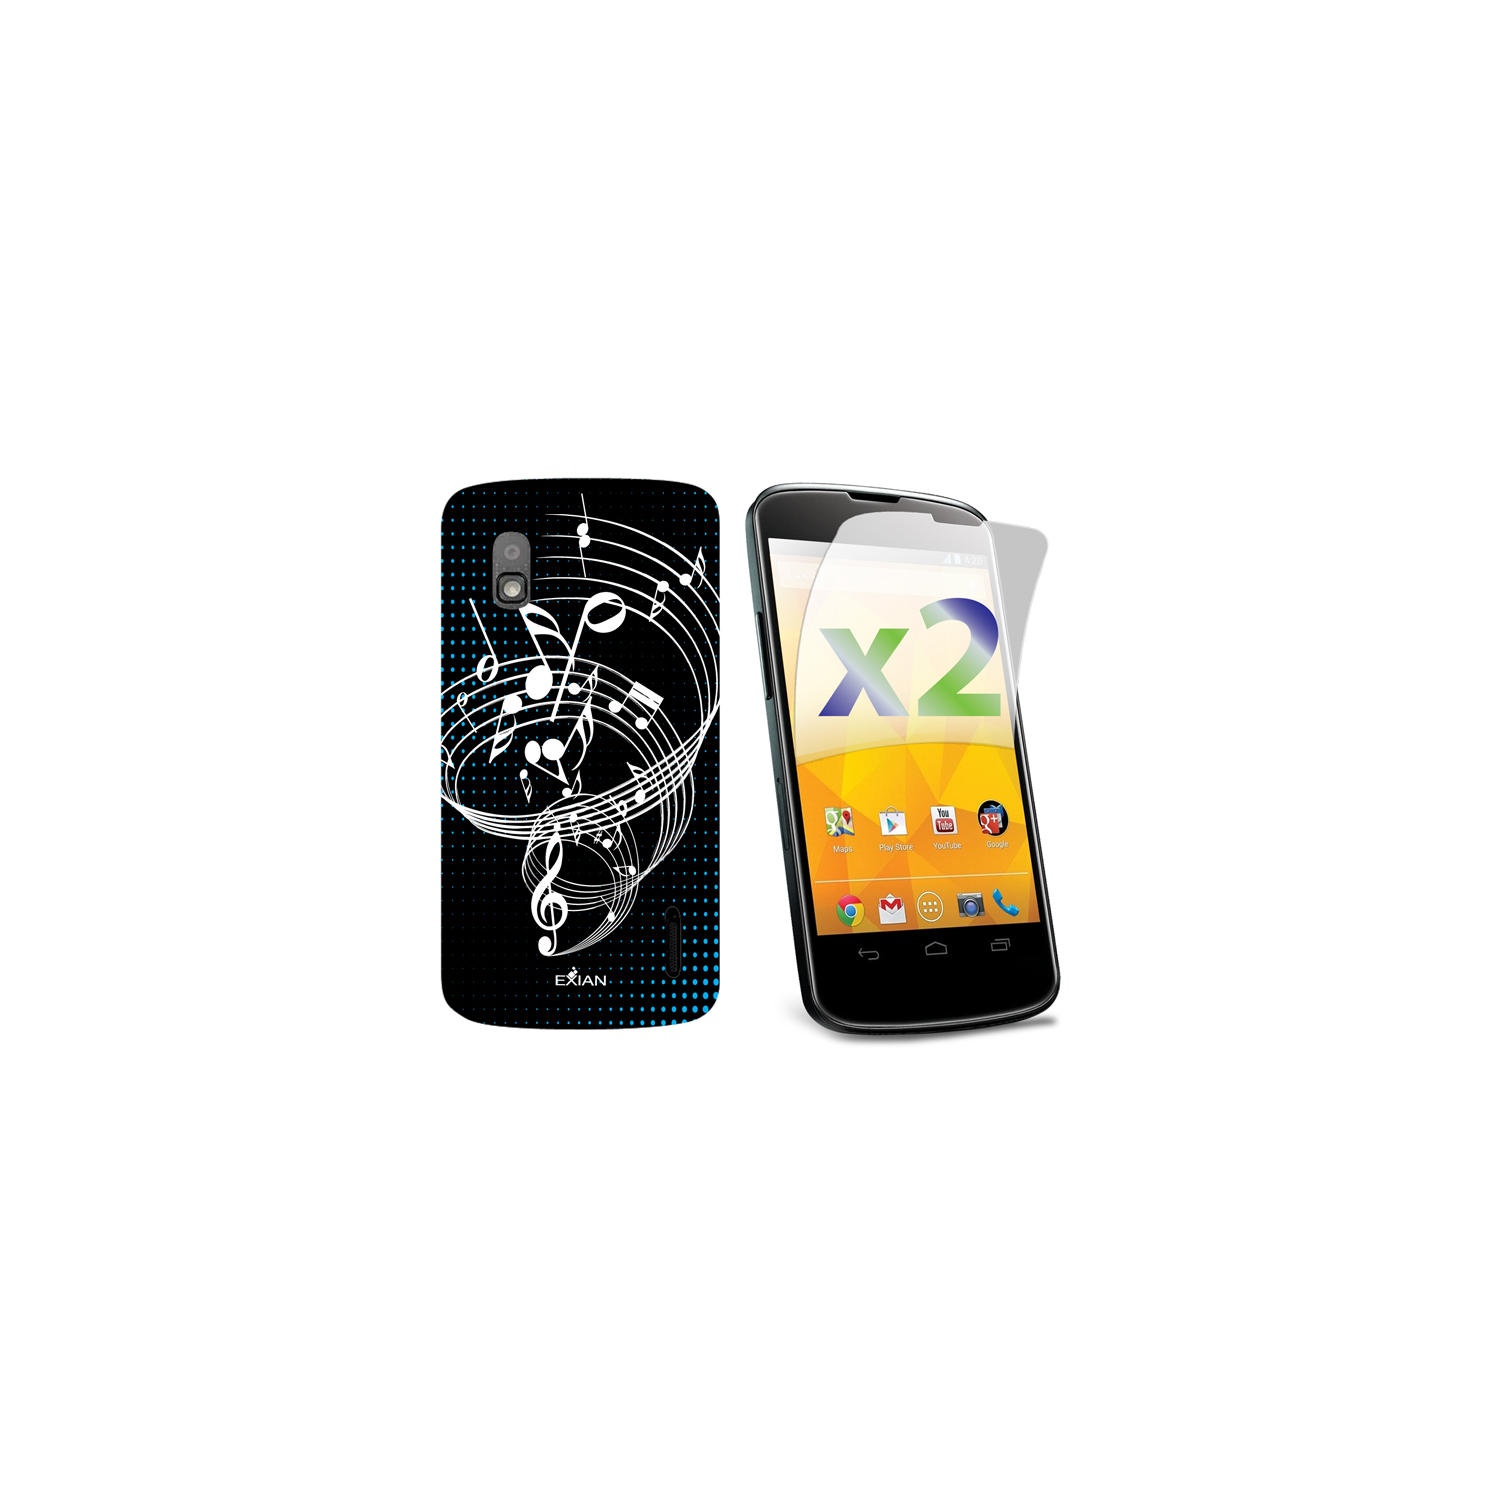 Exian Google LG Nexus 4 Screen Protectors X 2 and TPU Case Exian Design Musical Notes Black